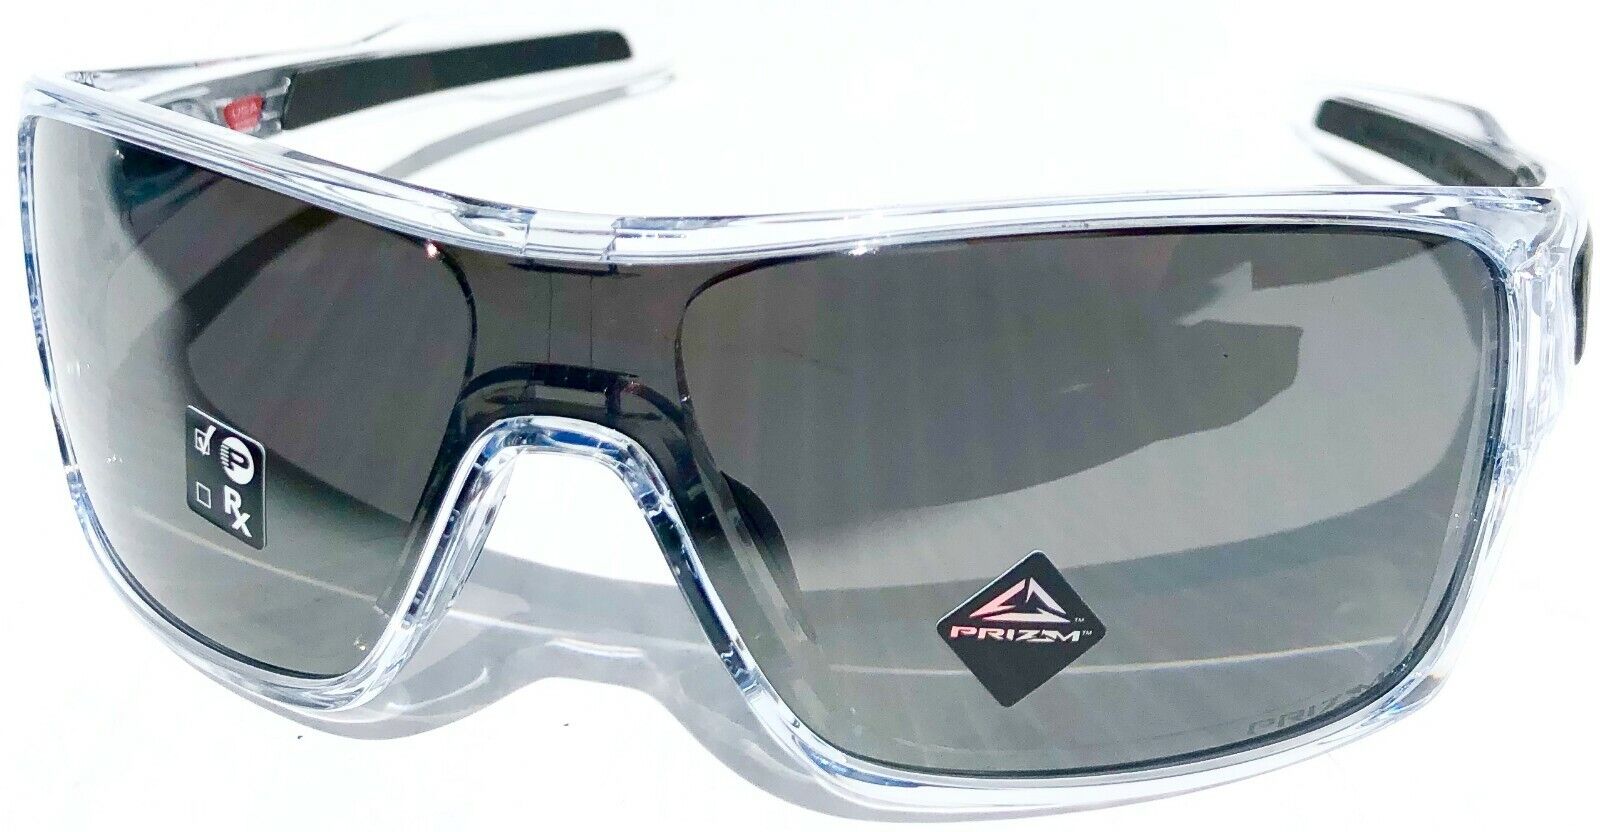 oakley turbine iridium sunglasses